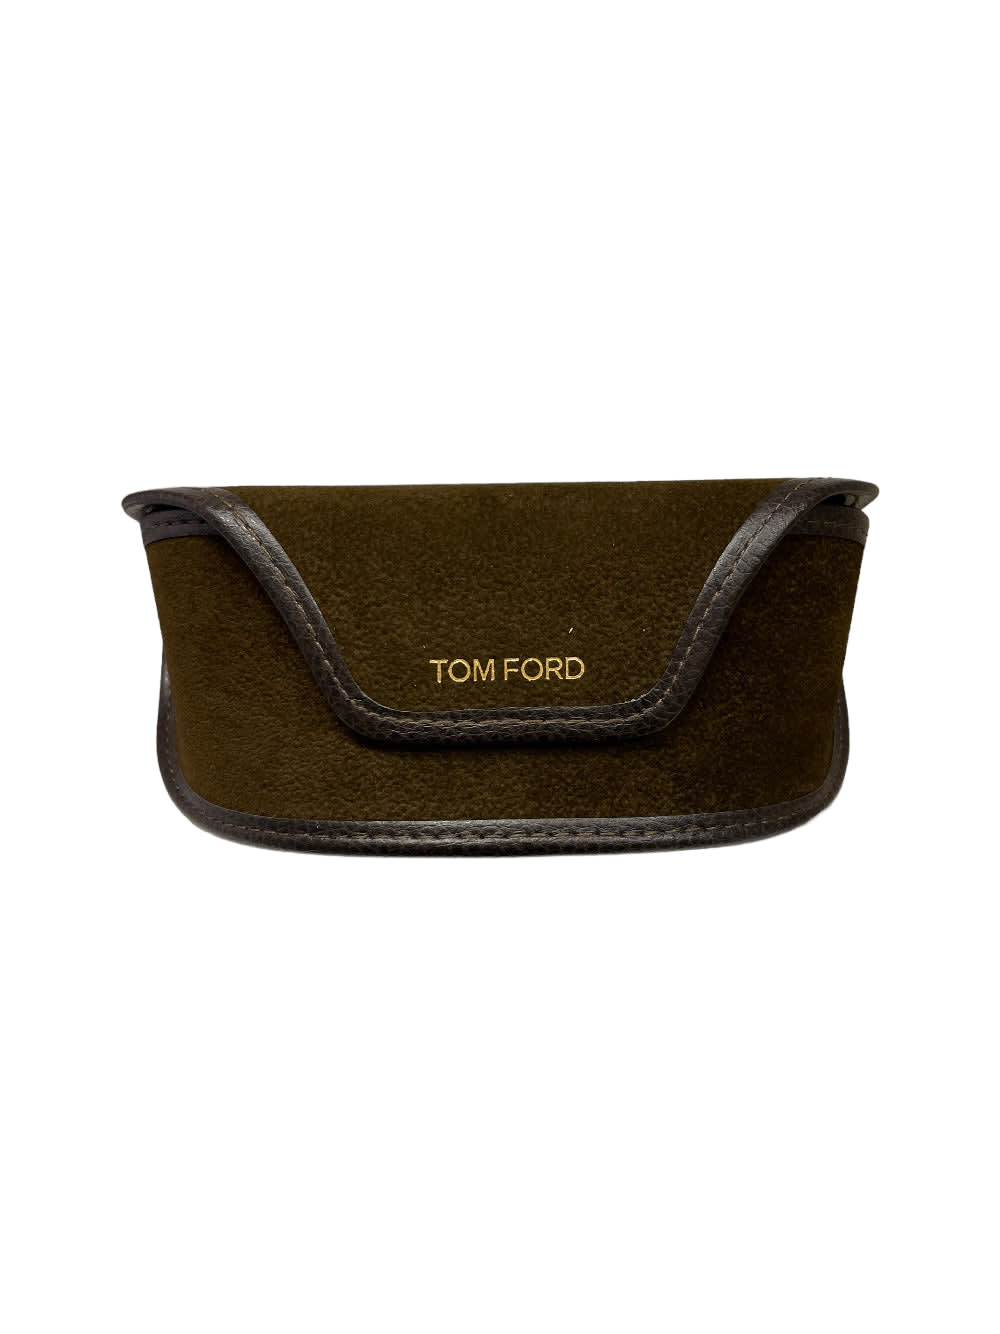 Shop Tom Ford Ft5696 - Black Glasses